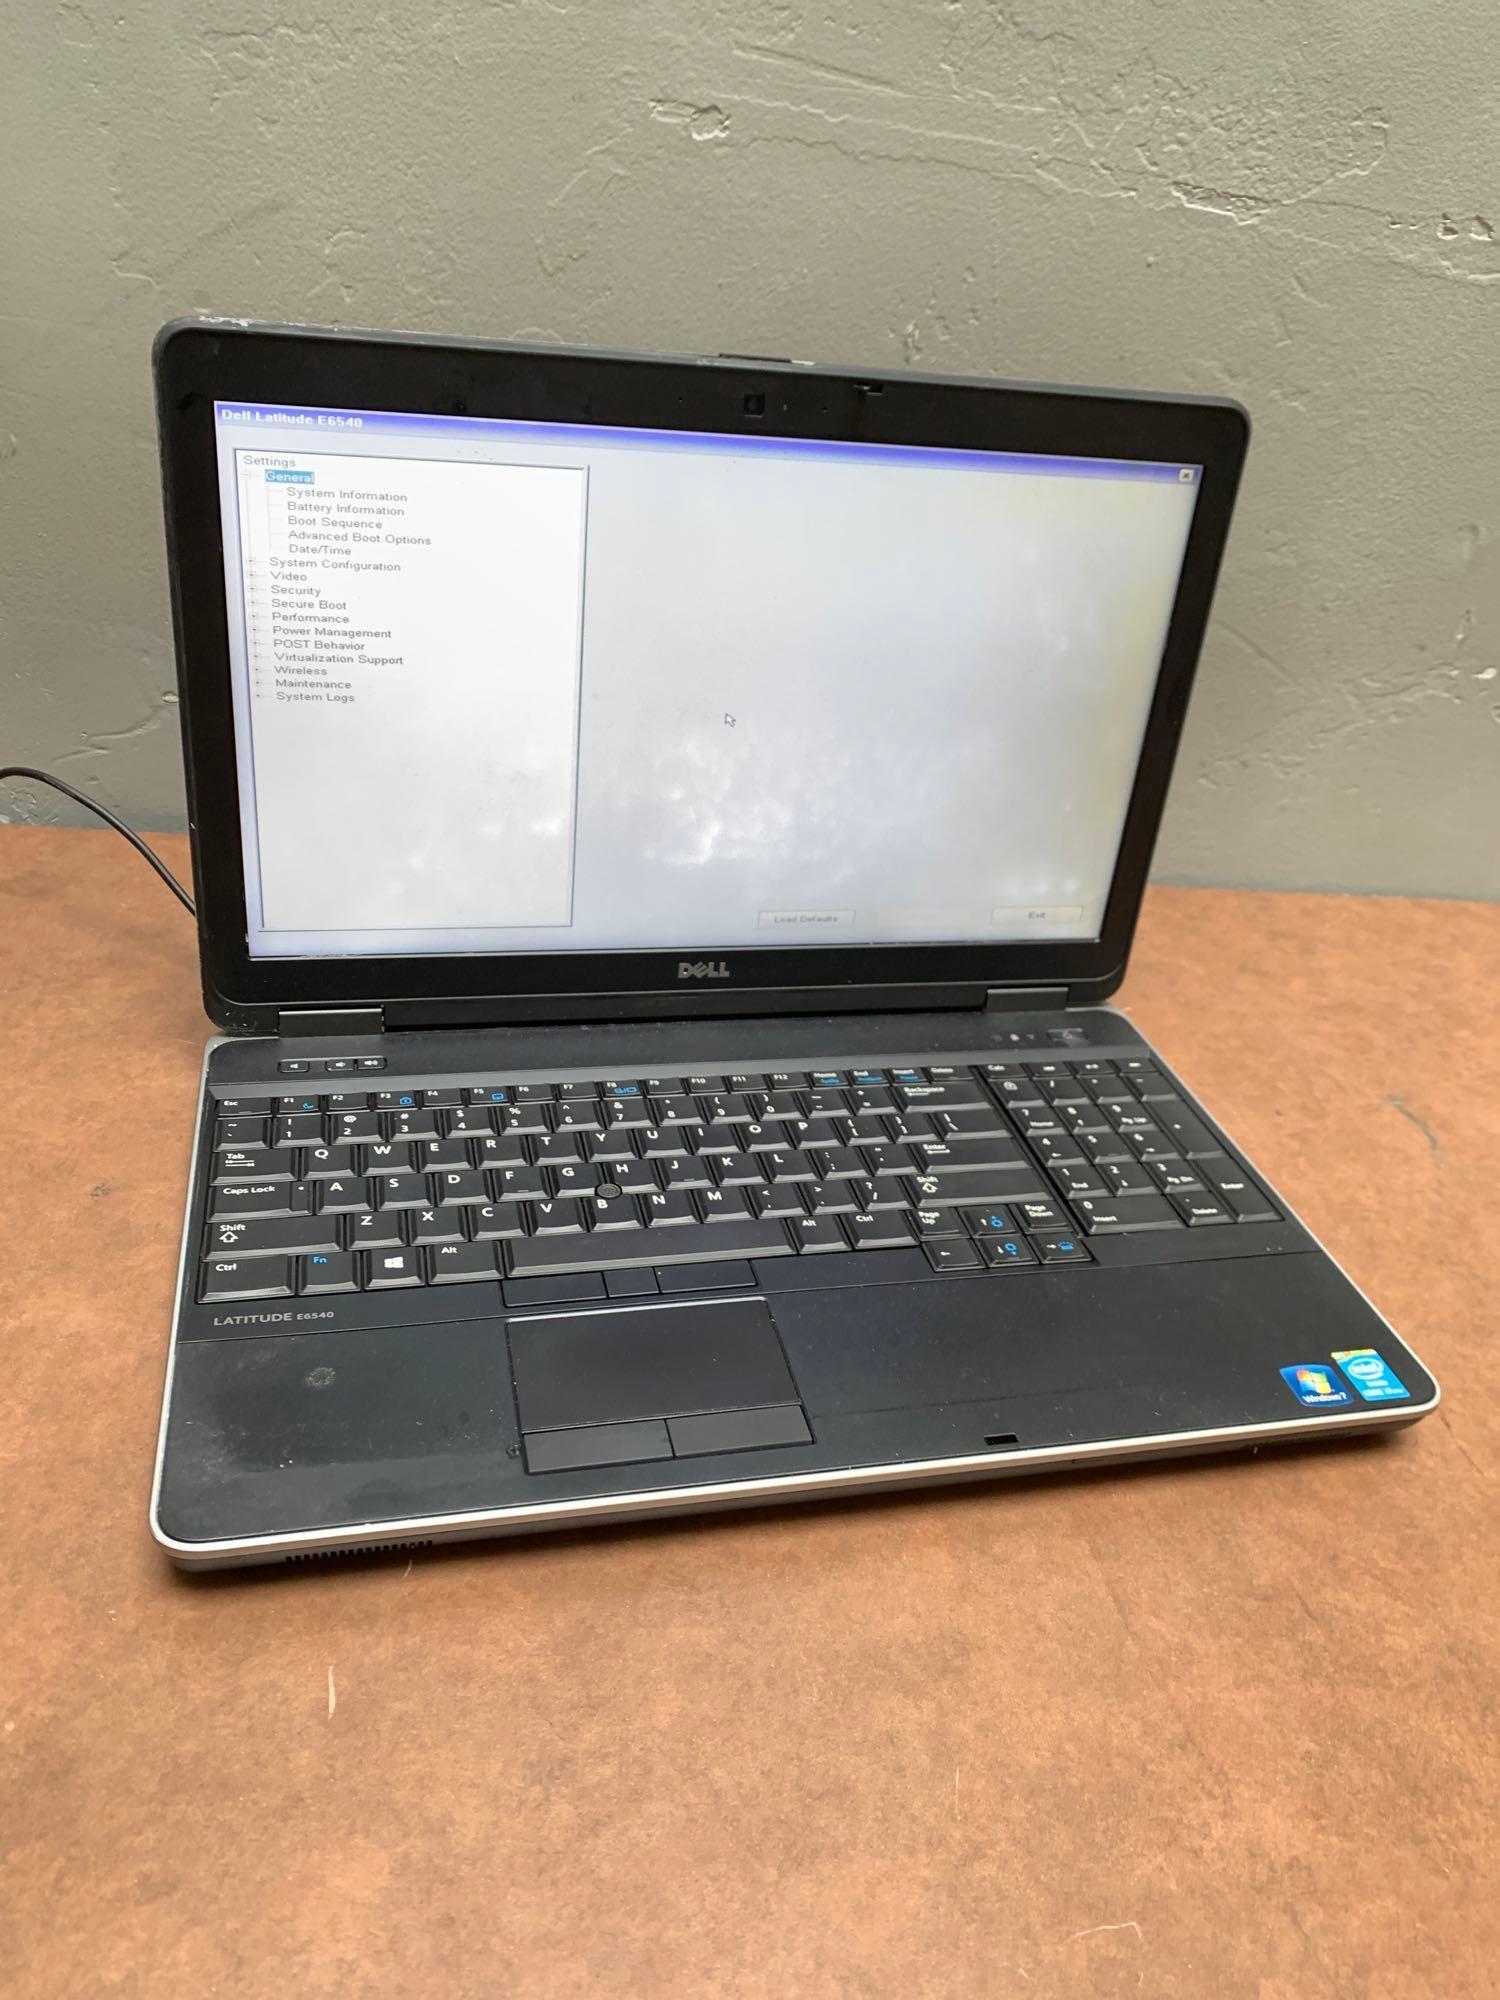 16pcs - Dell Latitude E6540 i7 Laptops - PARTS